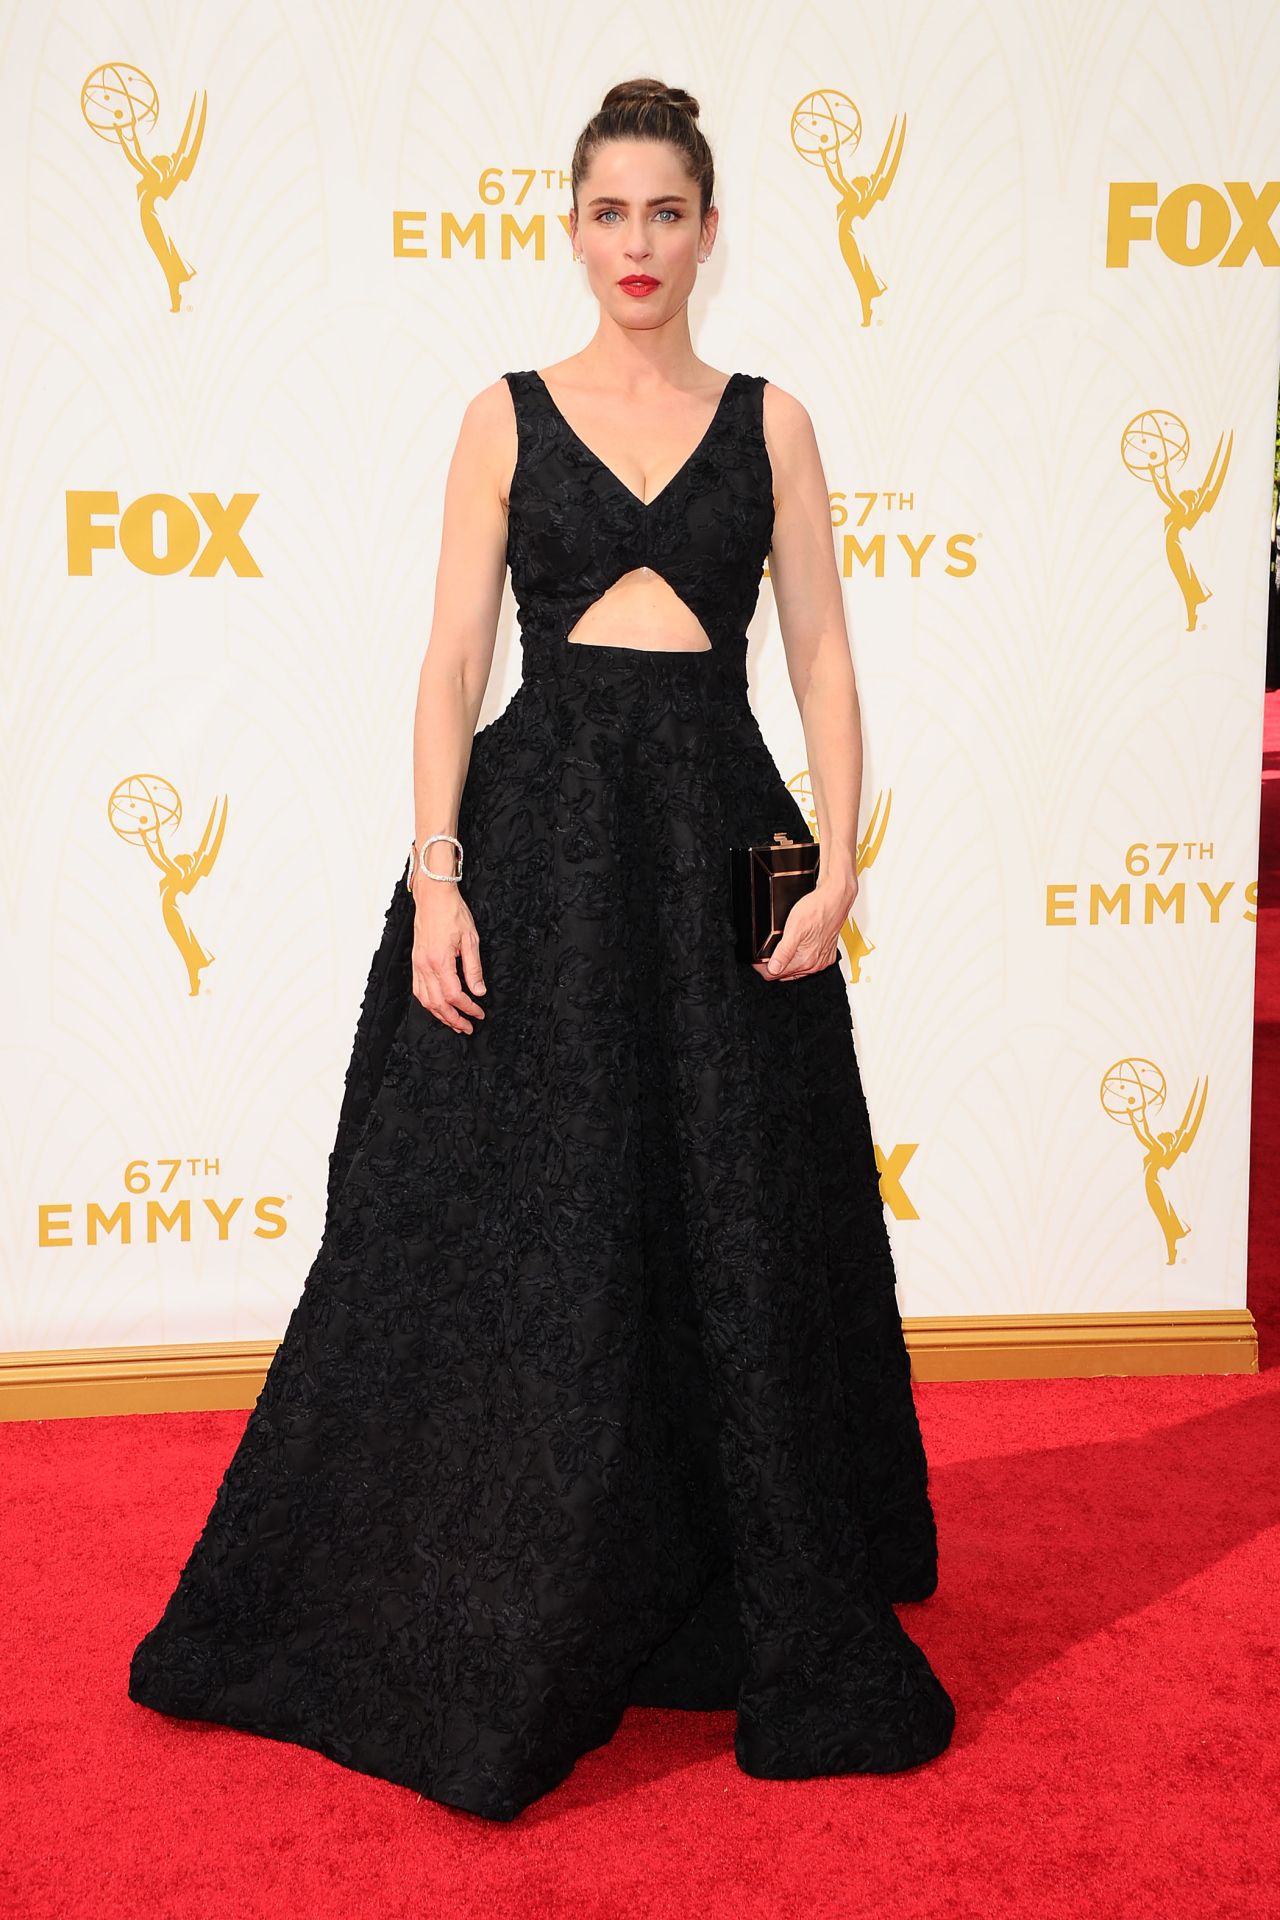 Amanda Peet – 2015 Primetime Emmy Awards in Los Angeles